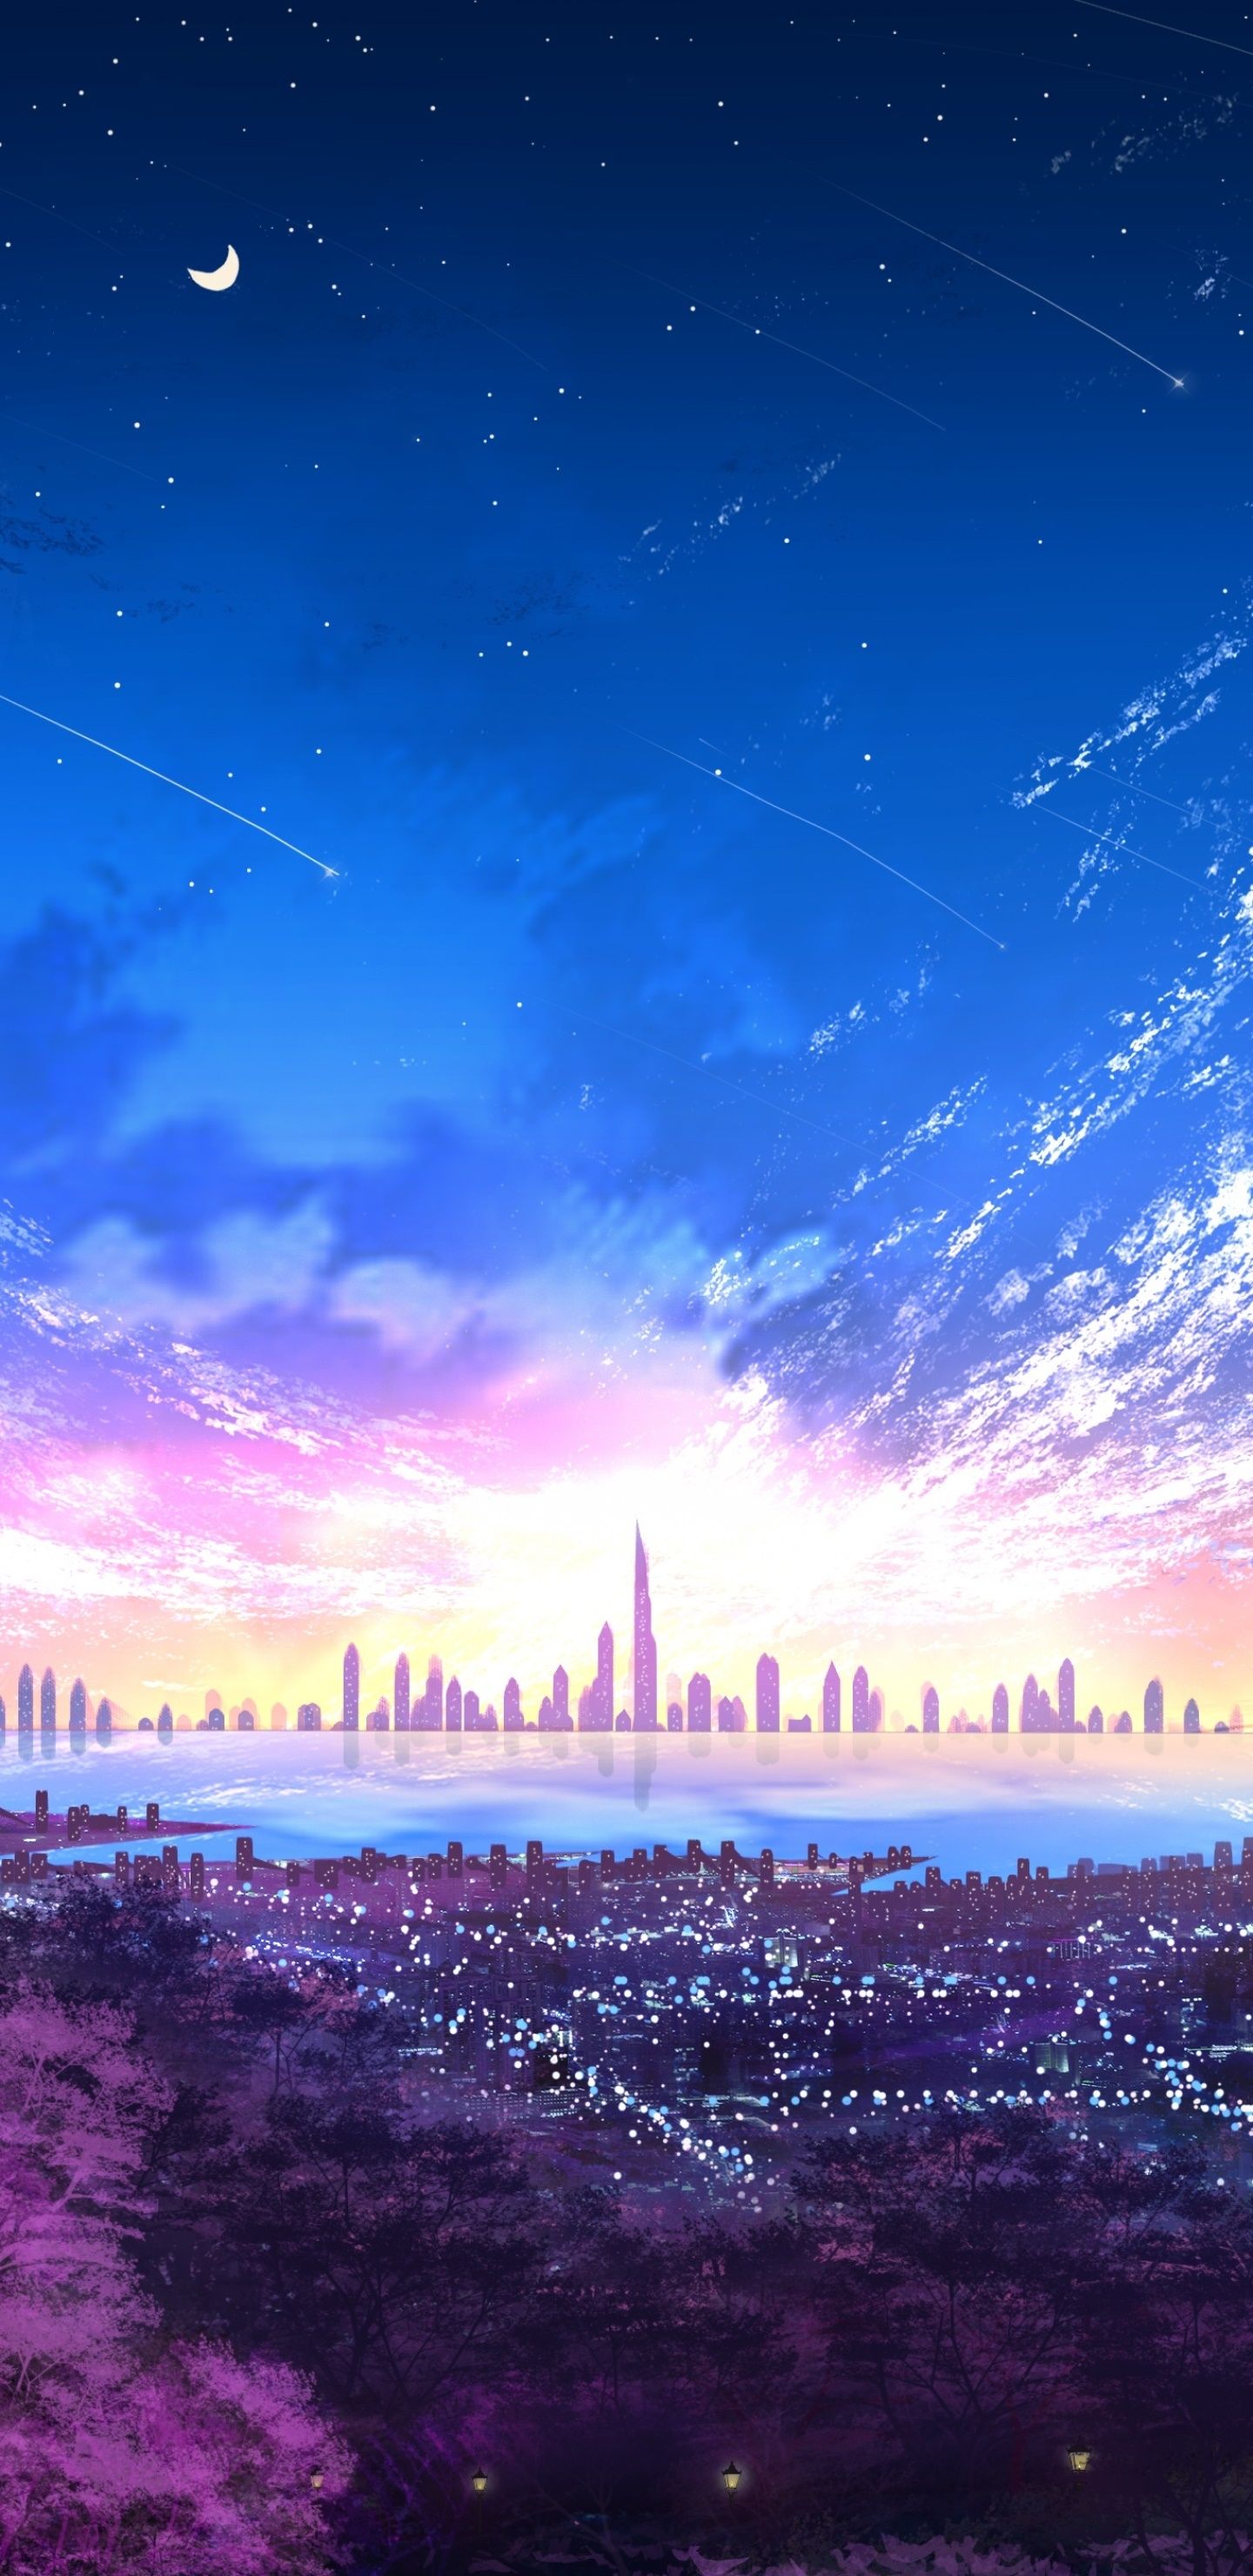 Wallpaper / Anime City Phone Wallpaper, Sky, 1440x2960 free download